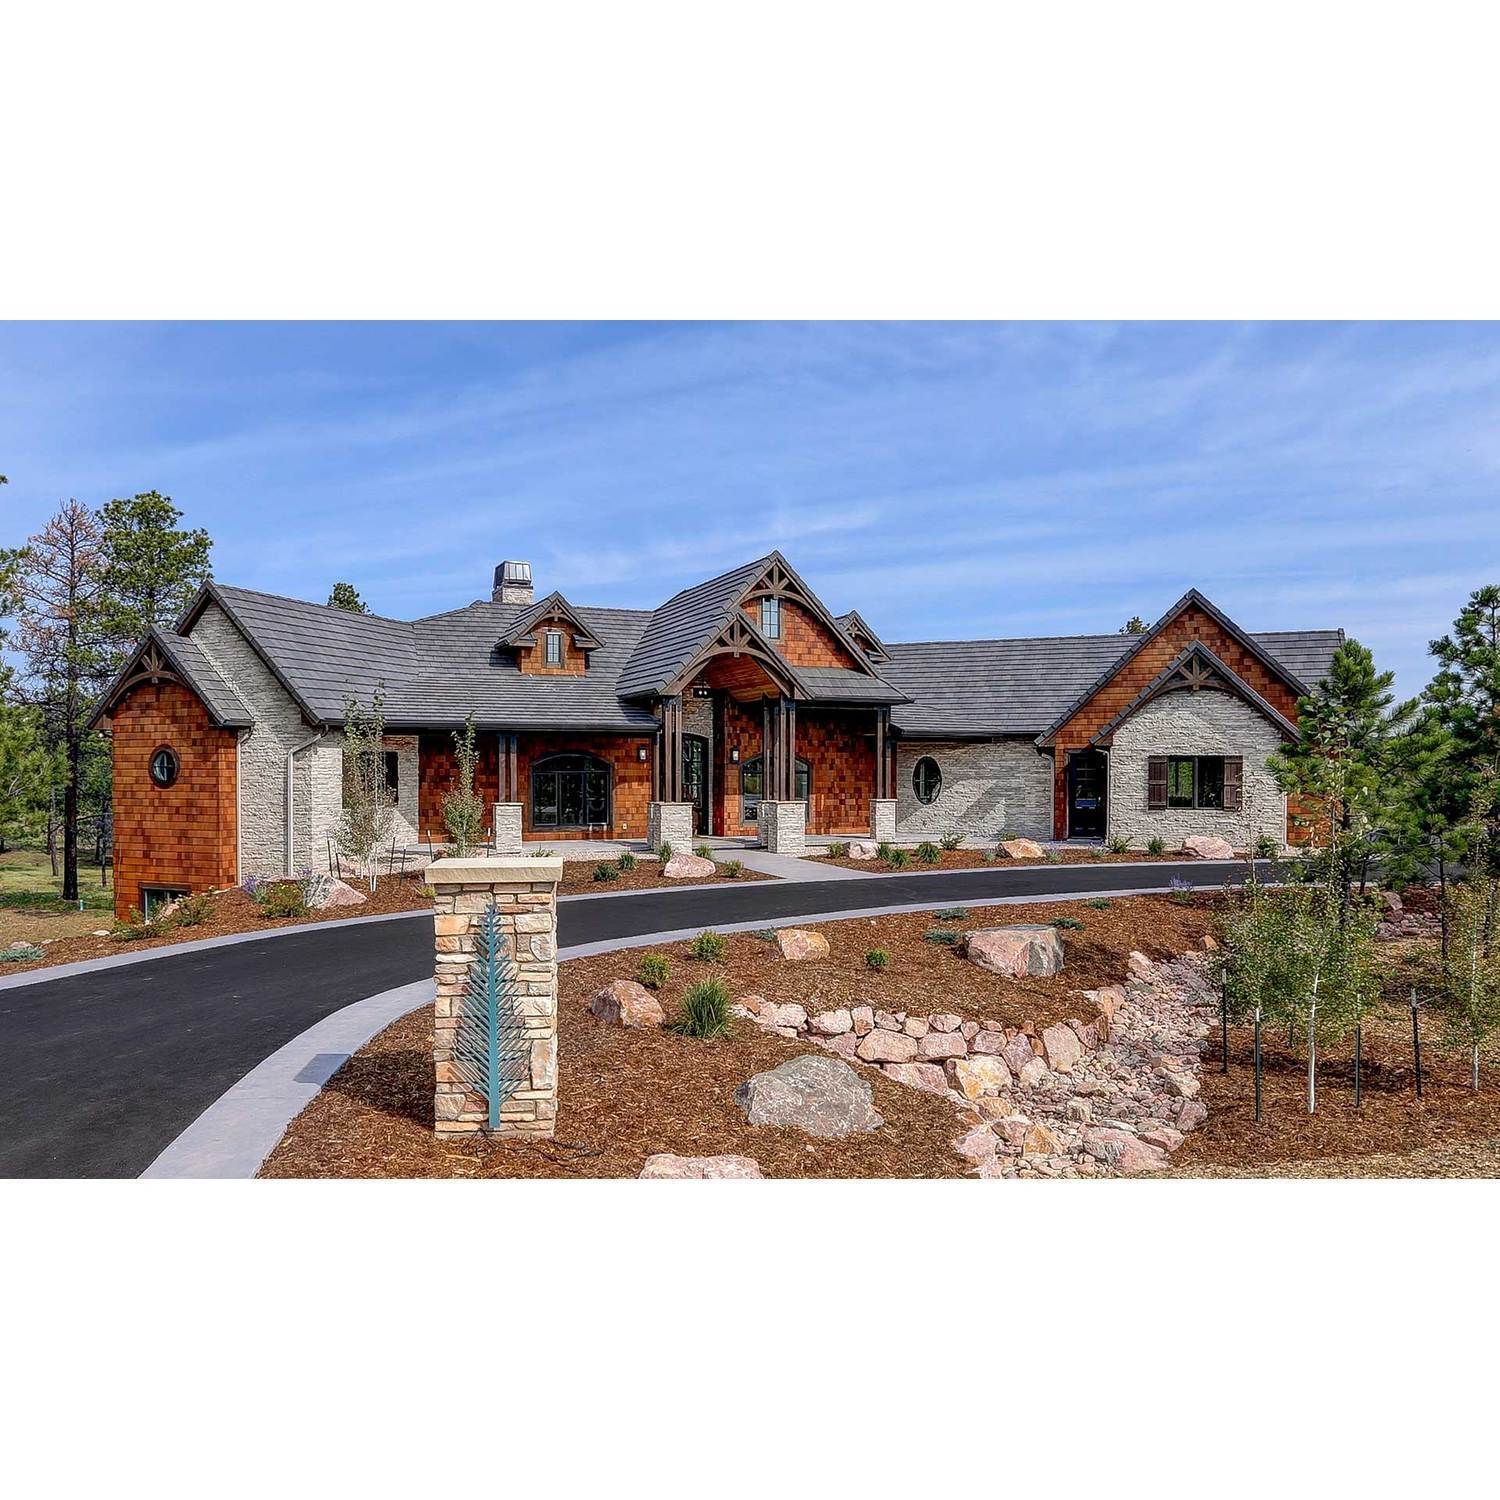 35. Galiant Homes xây dựng tại 4783 Farmingdale Dr, Colorado Springs, CO 80918